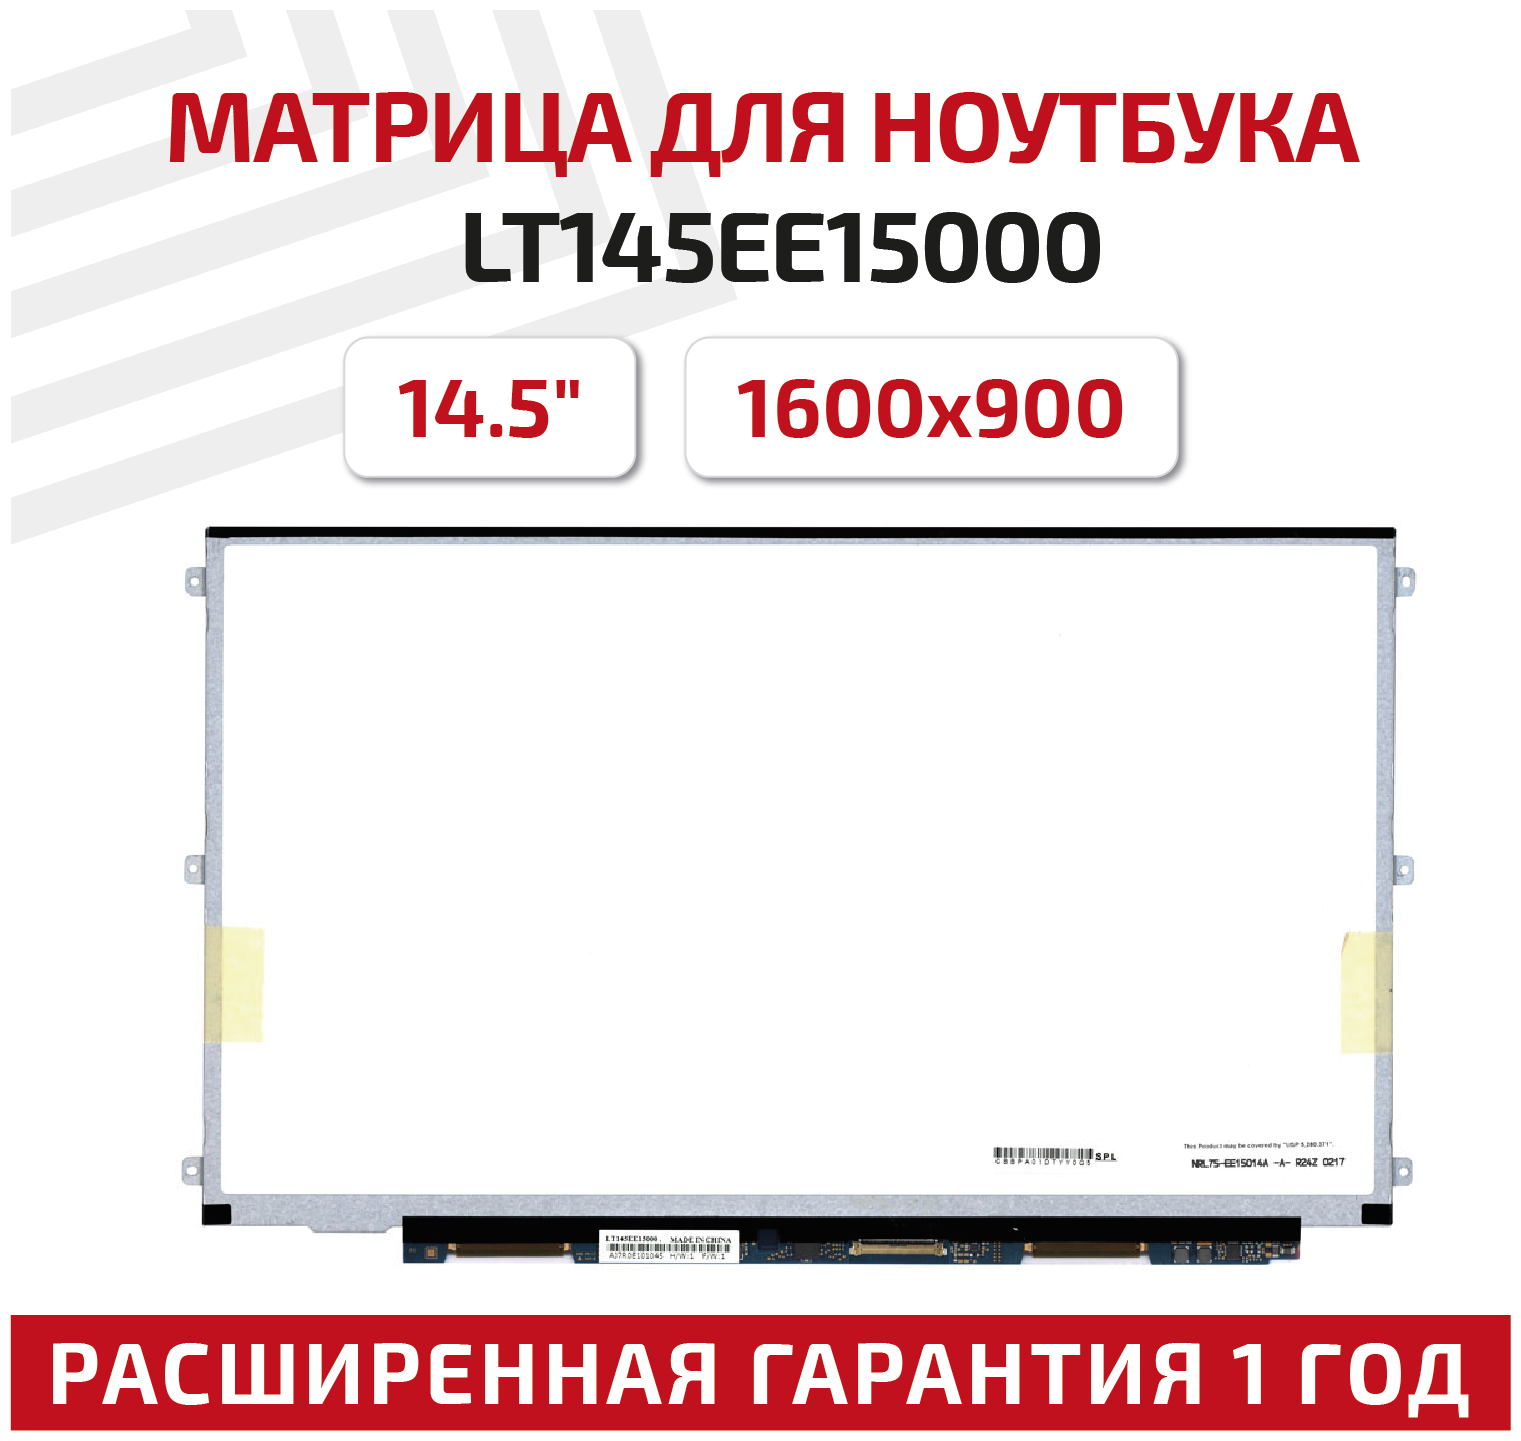 Матрица (экран) для ноутбука LT145EE15000, 14.5", 1600x900, светодиодная (LED), матовая